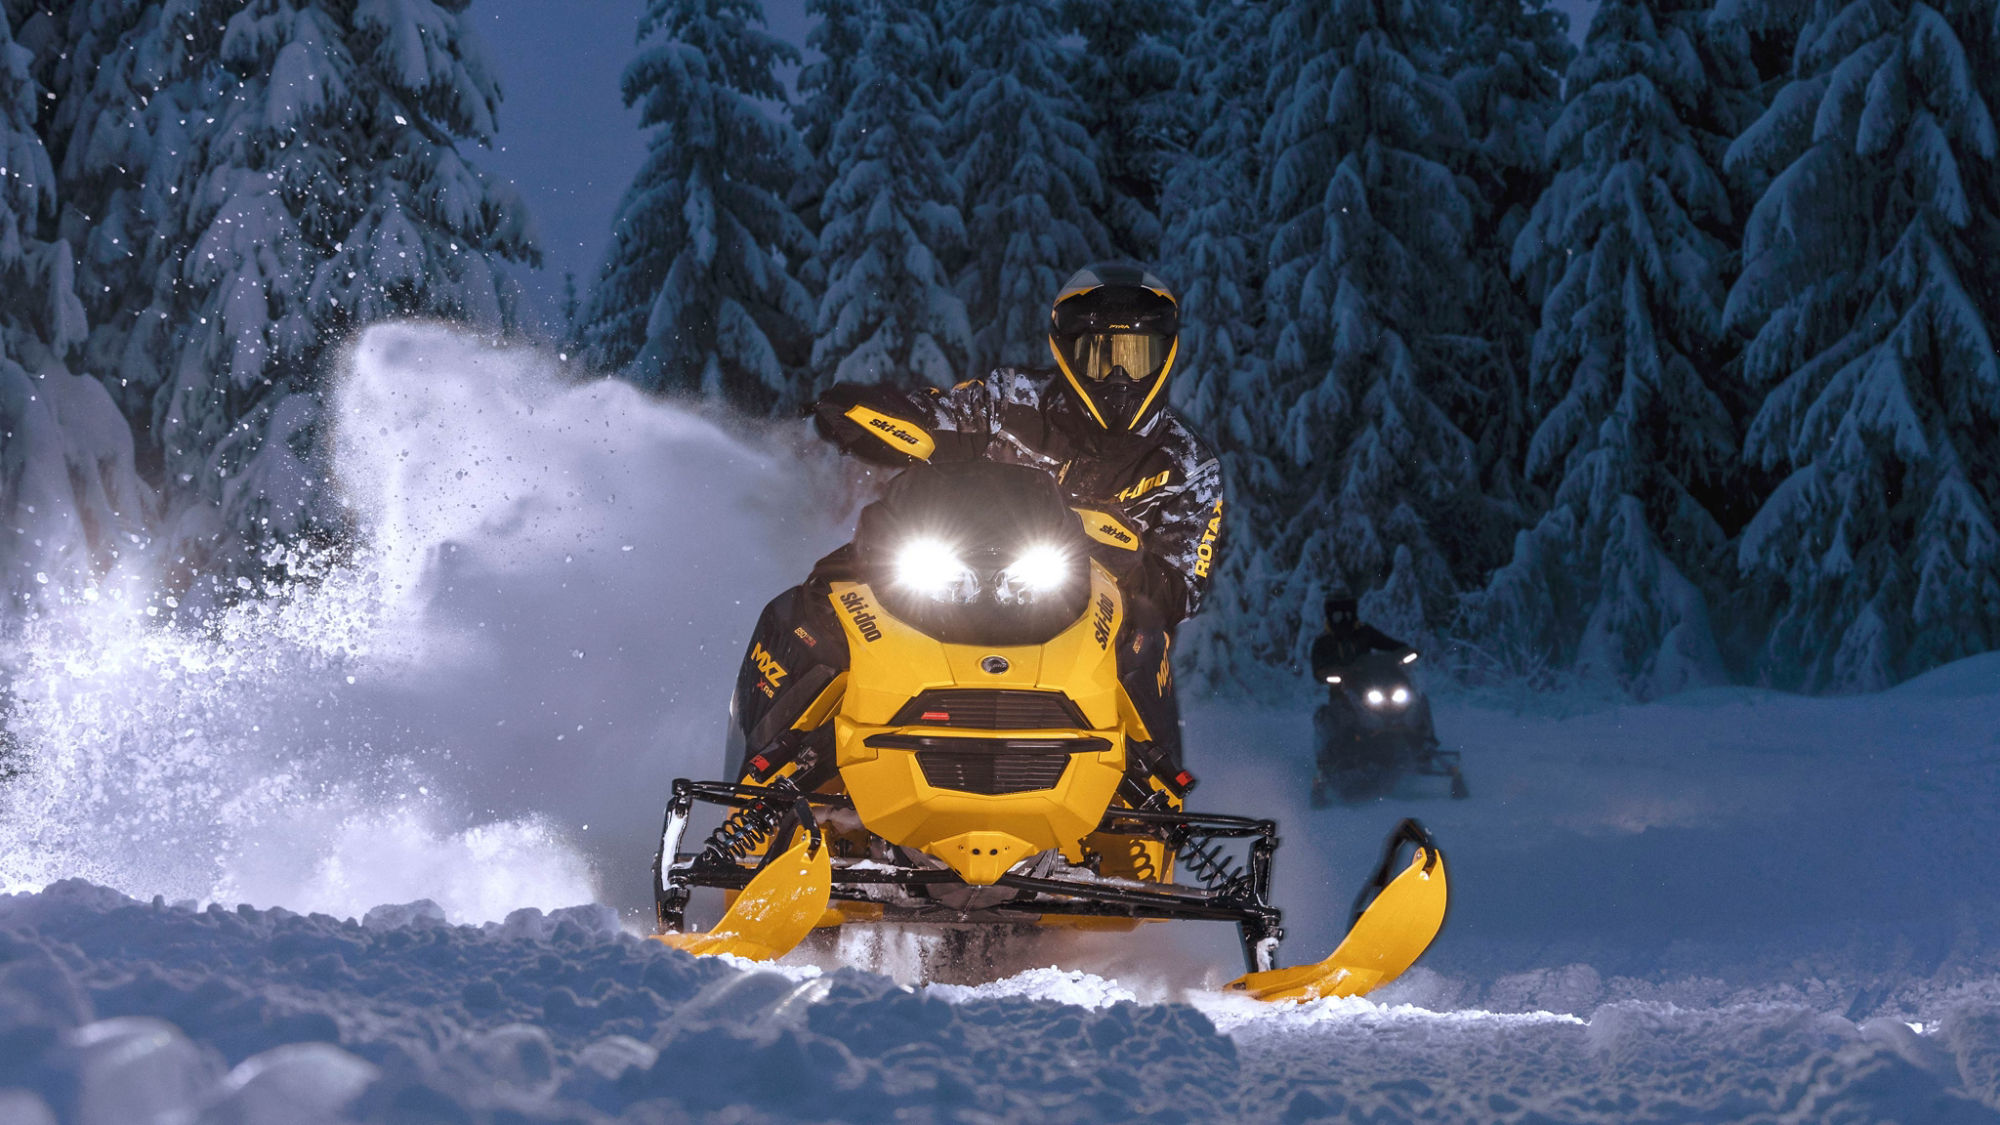 2025 Ski-Doo Trail MXZ snowmobile riding at night